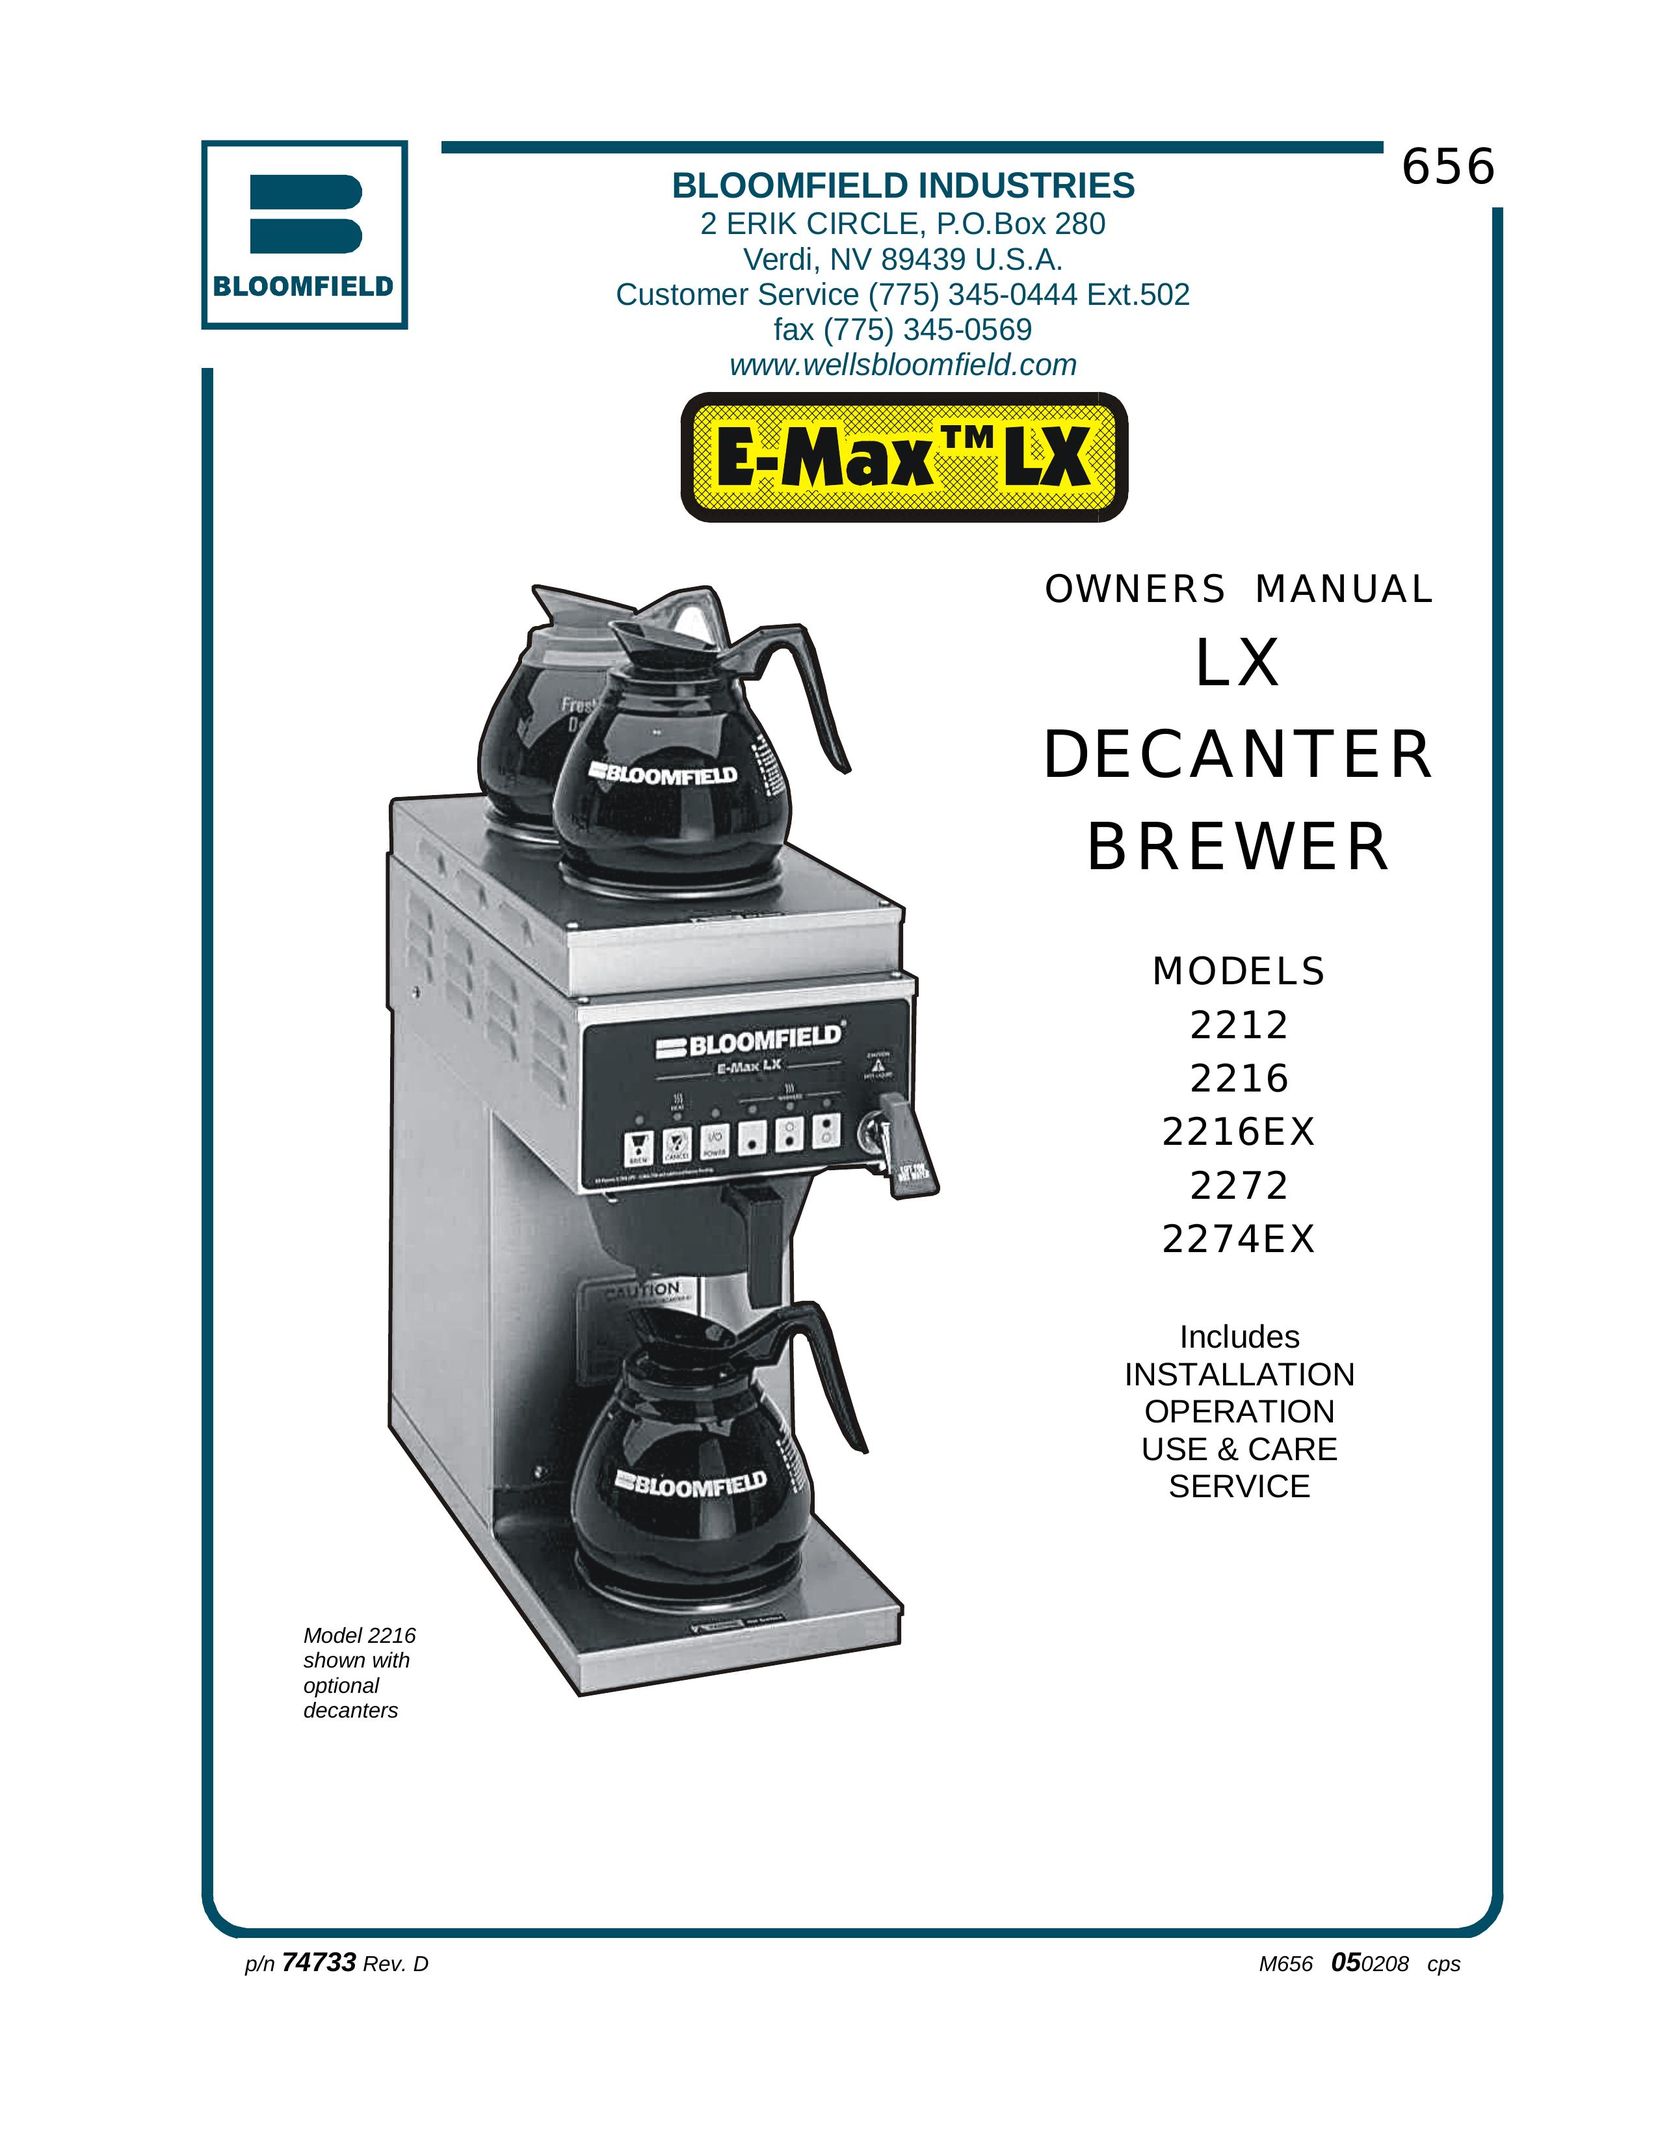 Bloomfield 2216 Coffeemaker User Manual